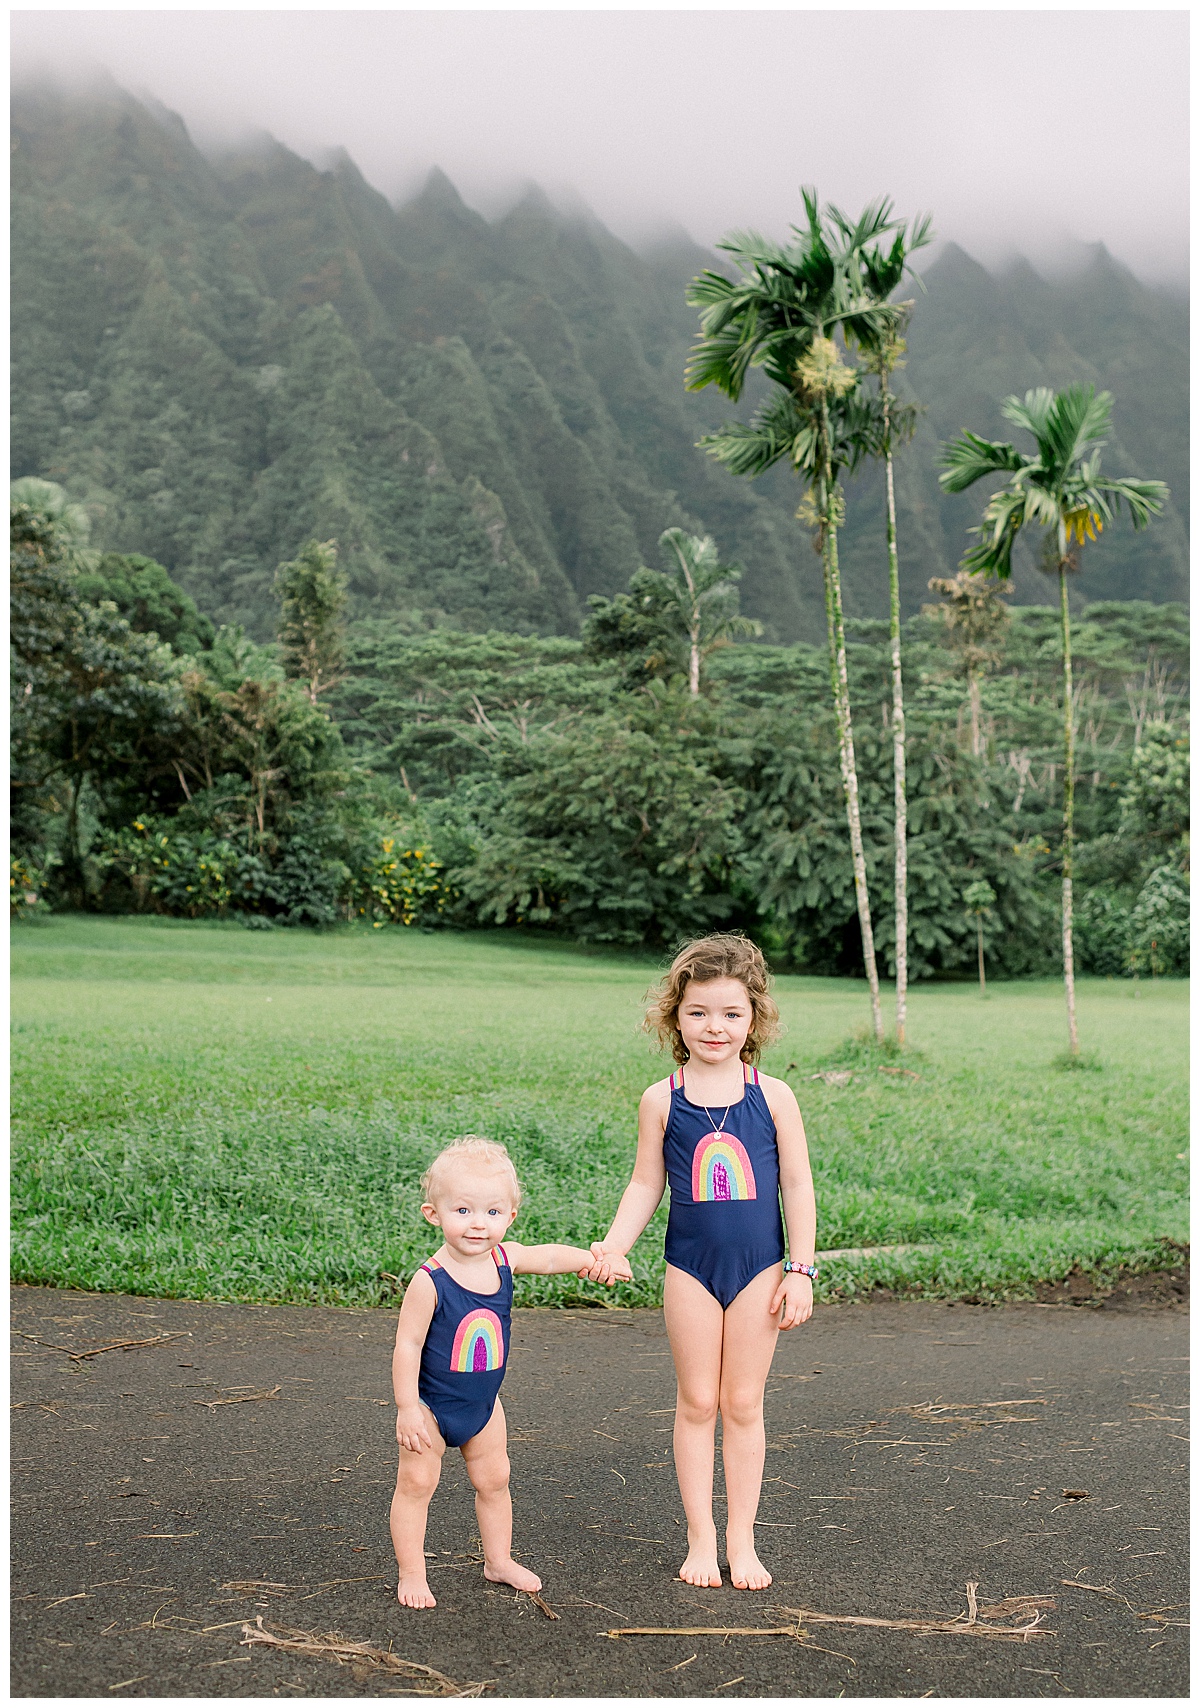 Our Hawaiian Vacation 2020